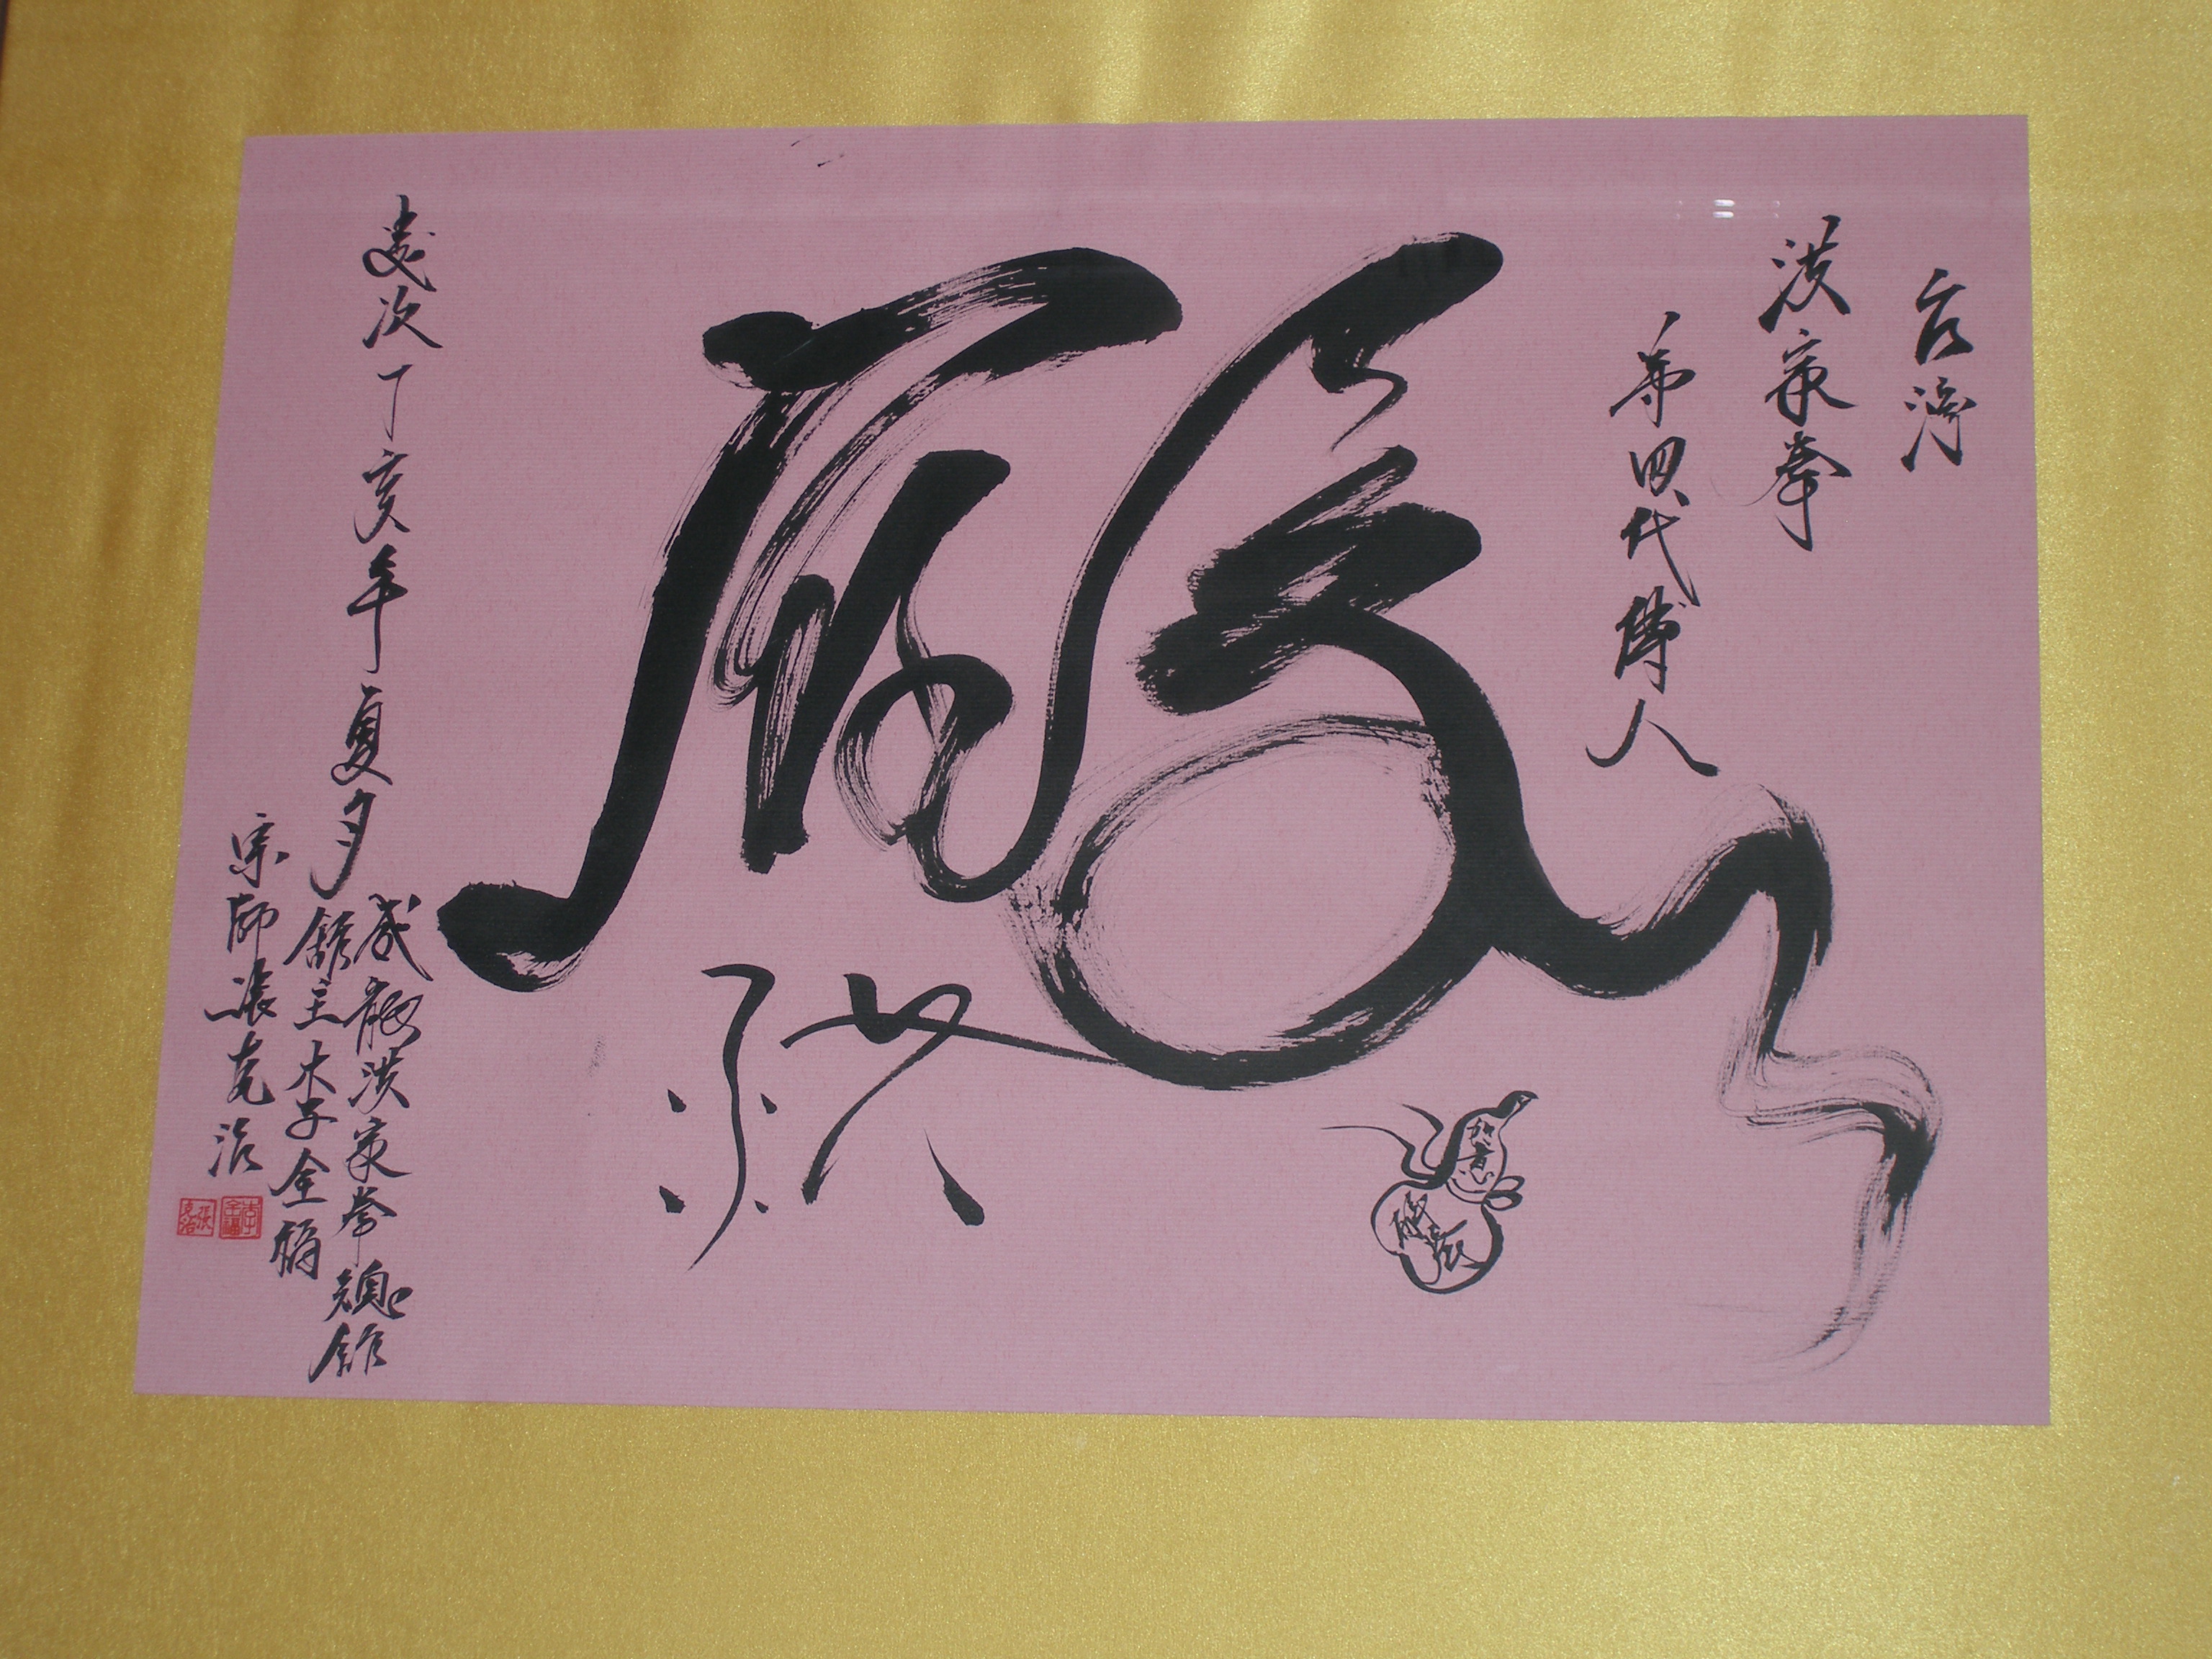 kaligrafie od Zhan Ke Zhi